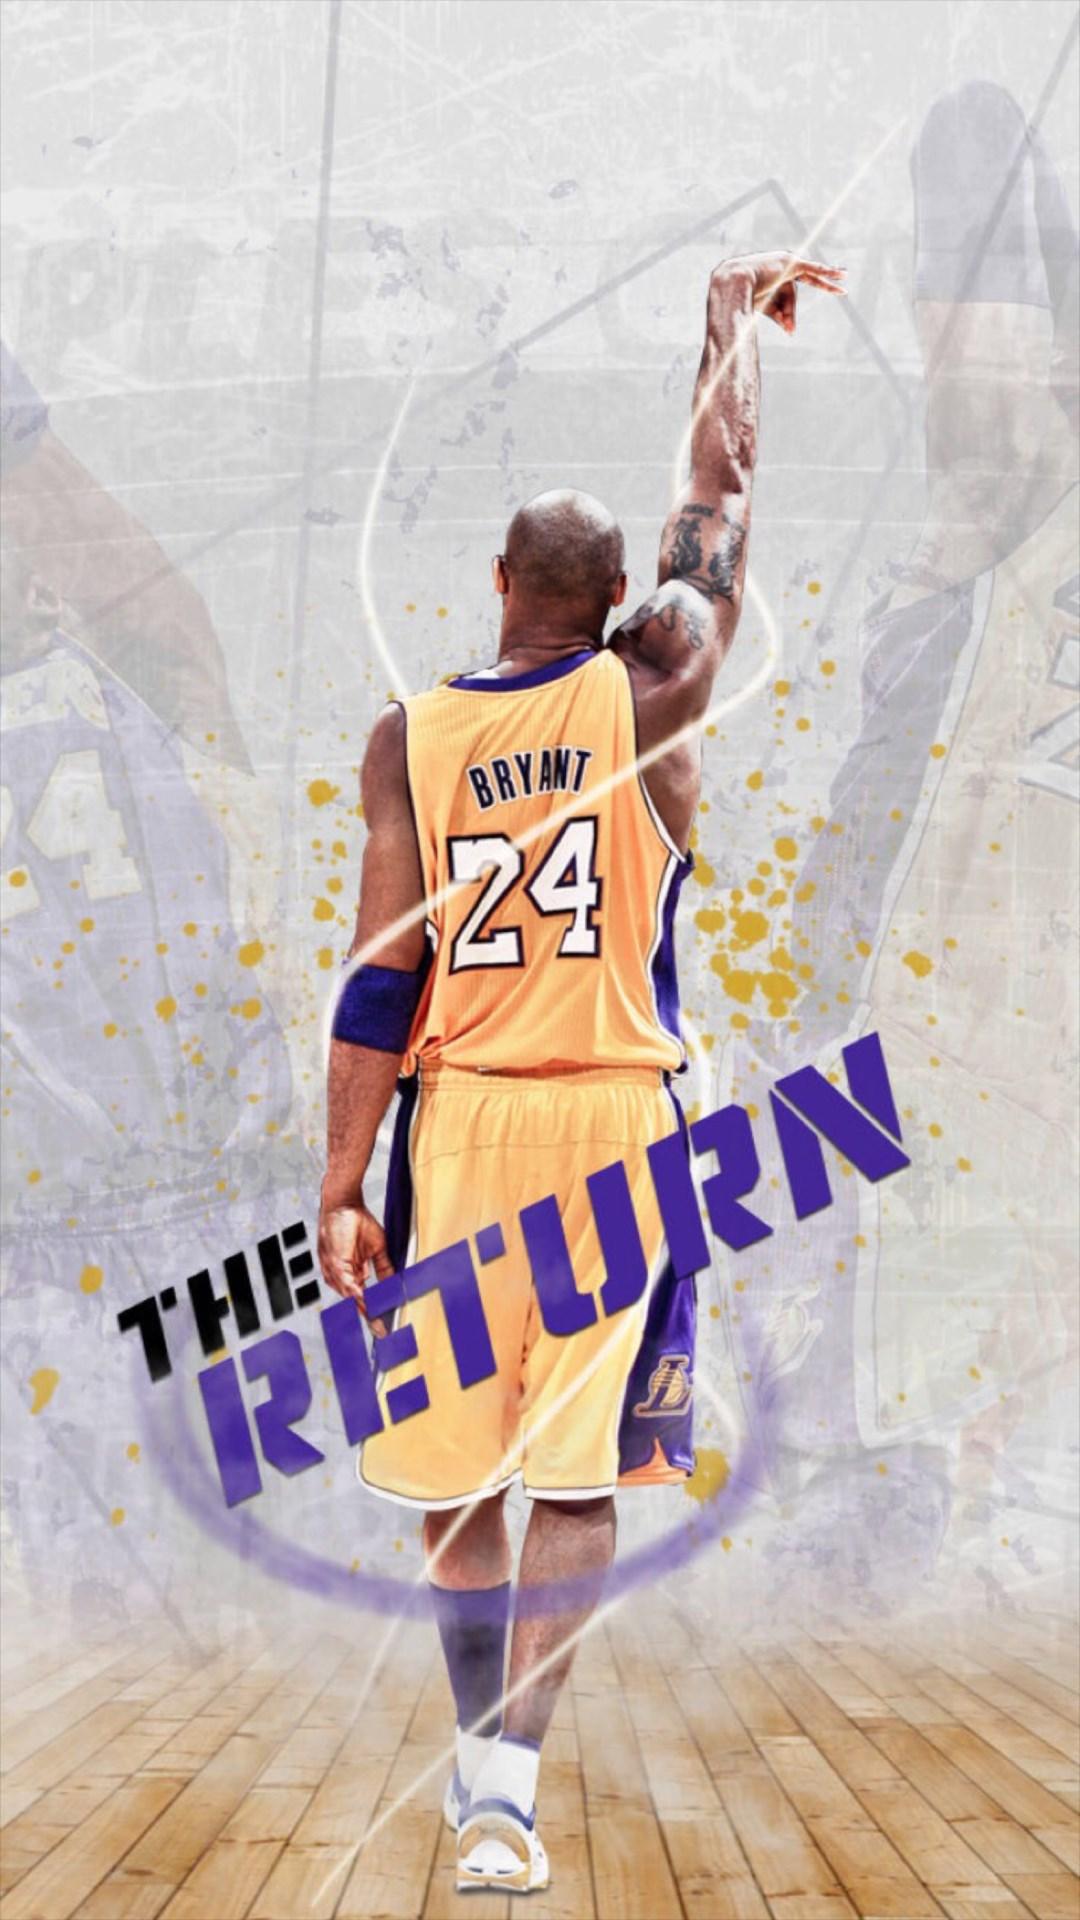 Bryant Kobe NBA Sports Super Star iPhone 8 Wallpaper Free Download